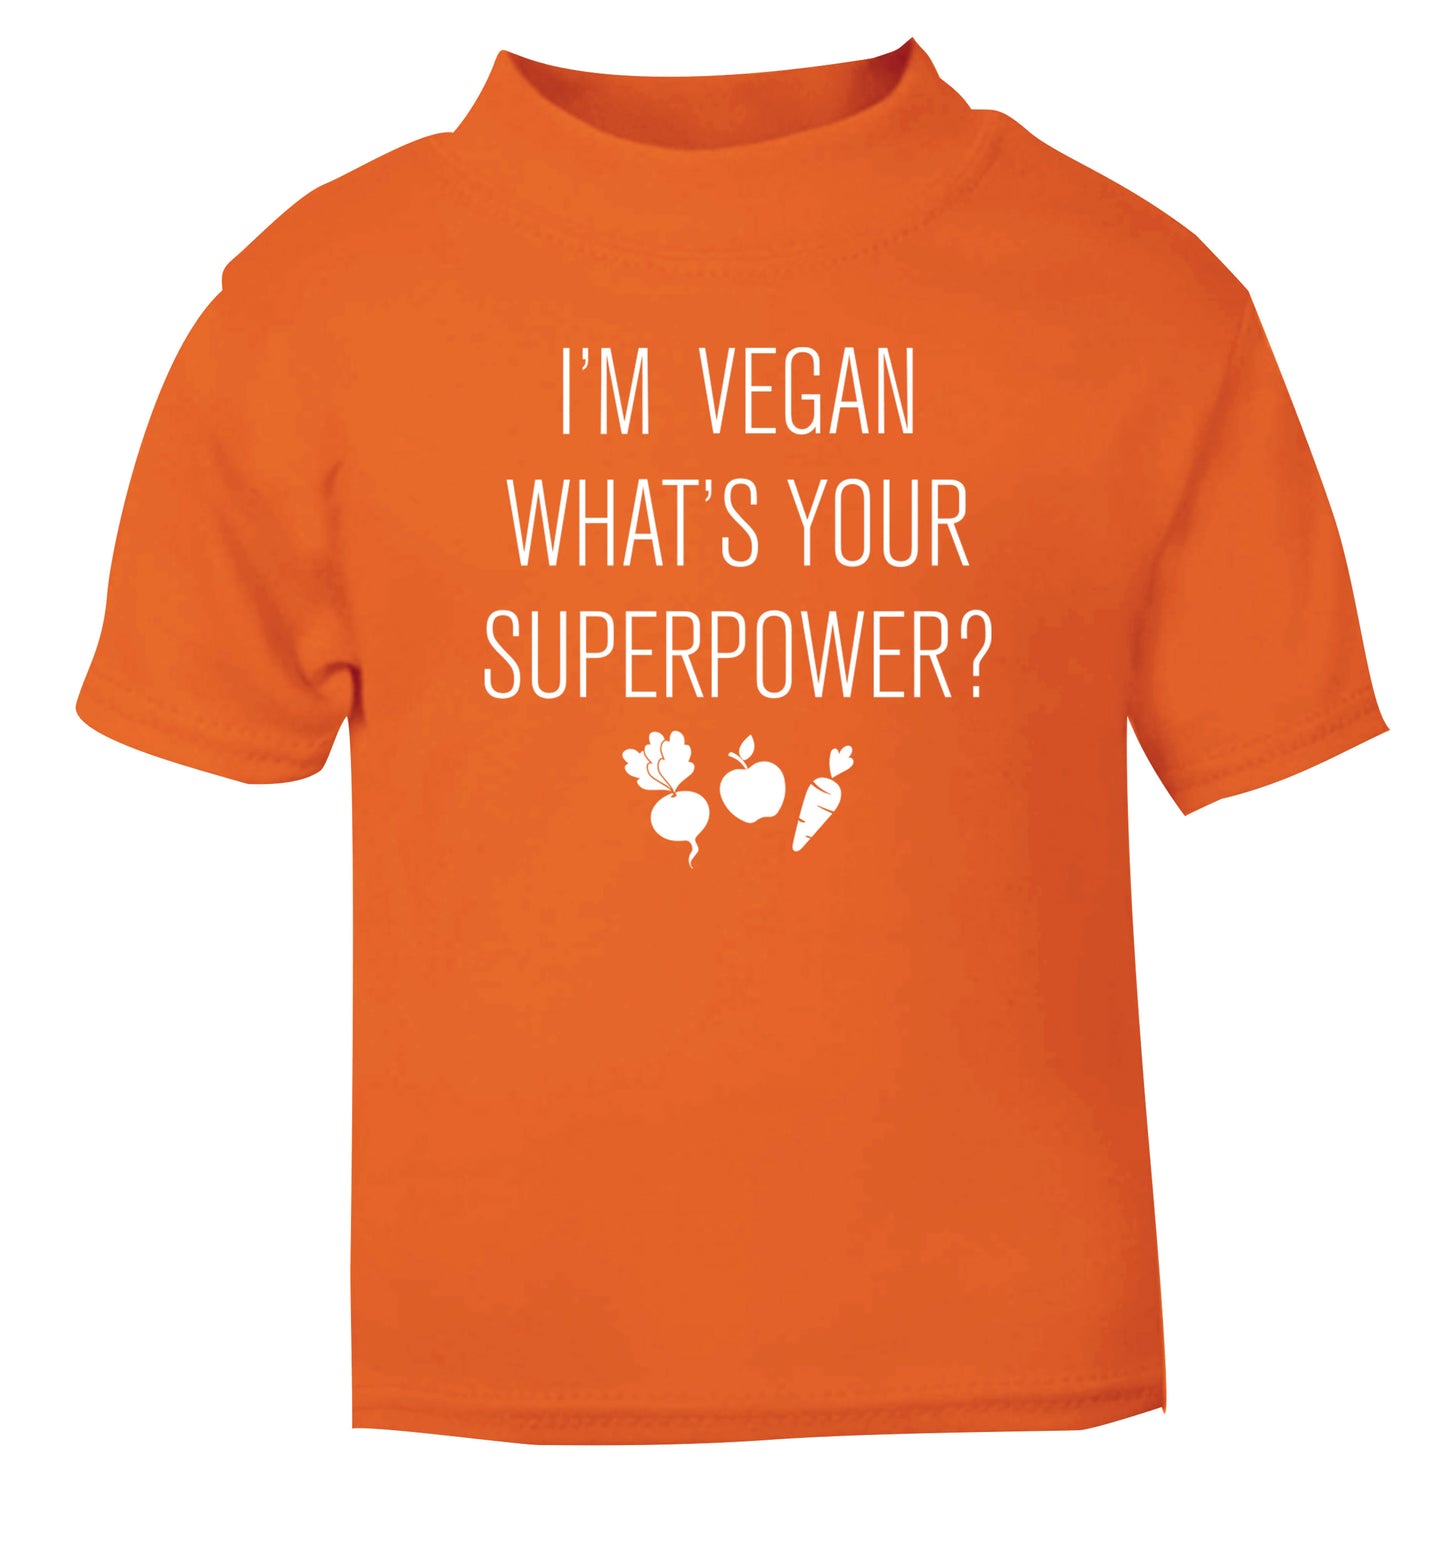 I'm Vegan What's Your Superpower? orange Baby Toddler Tshirt 2 Years